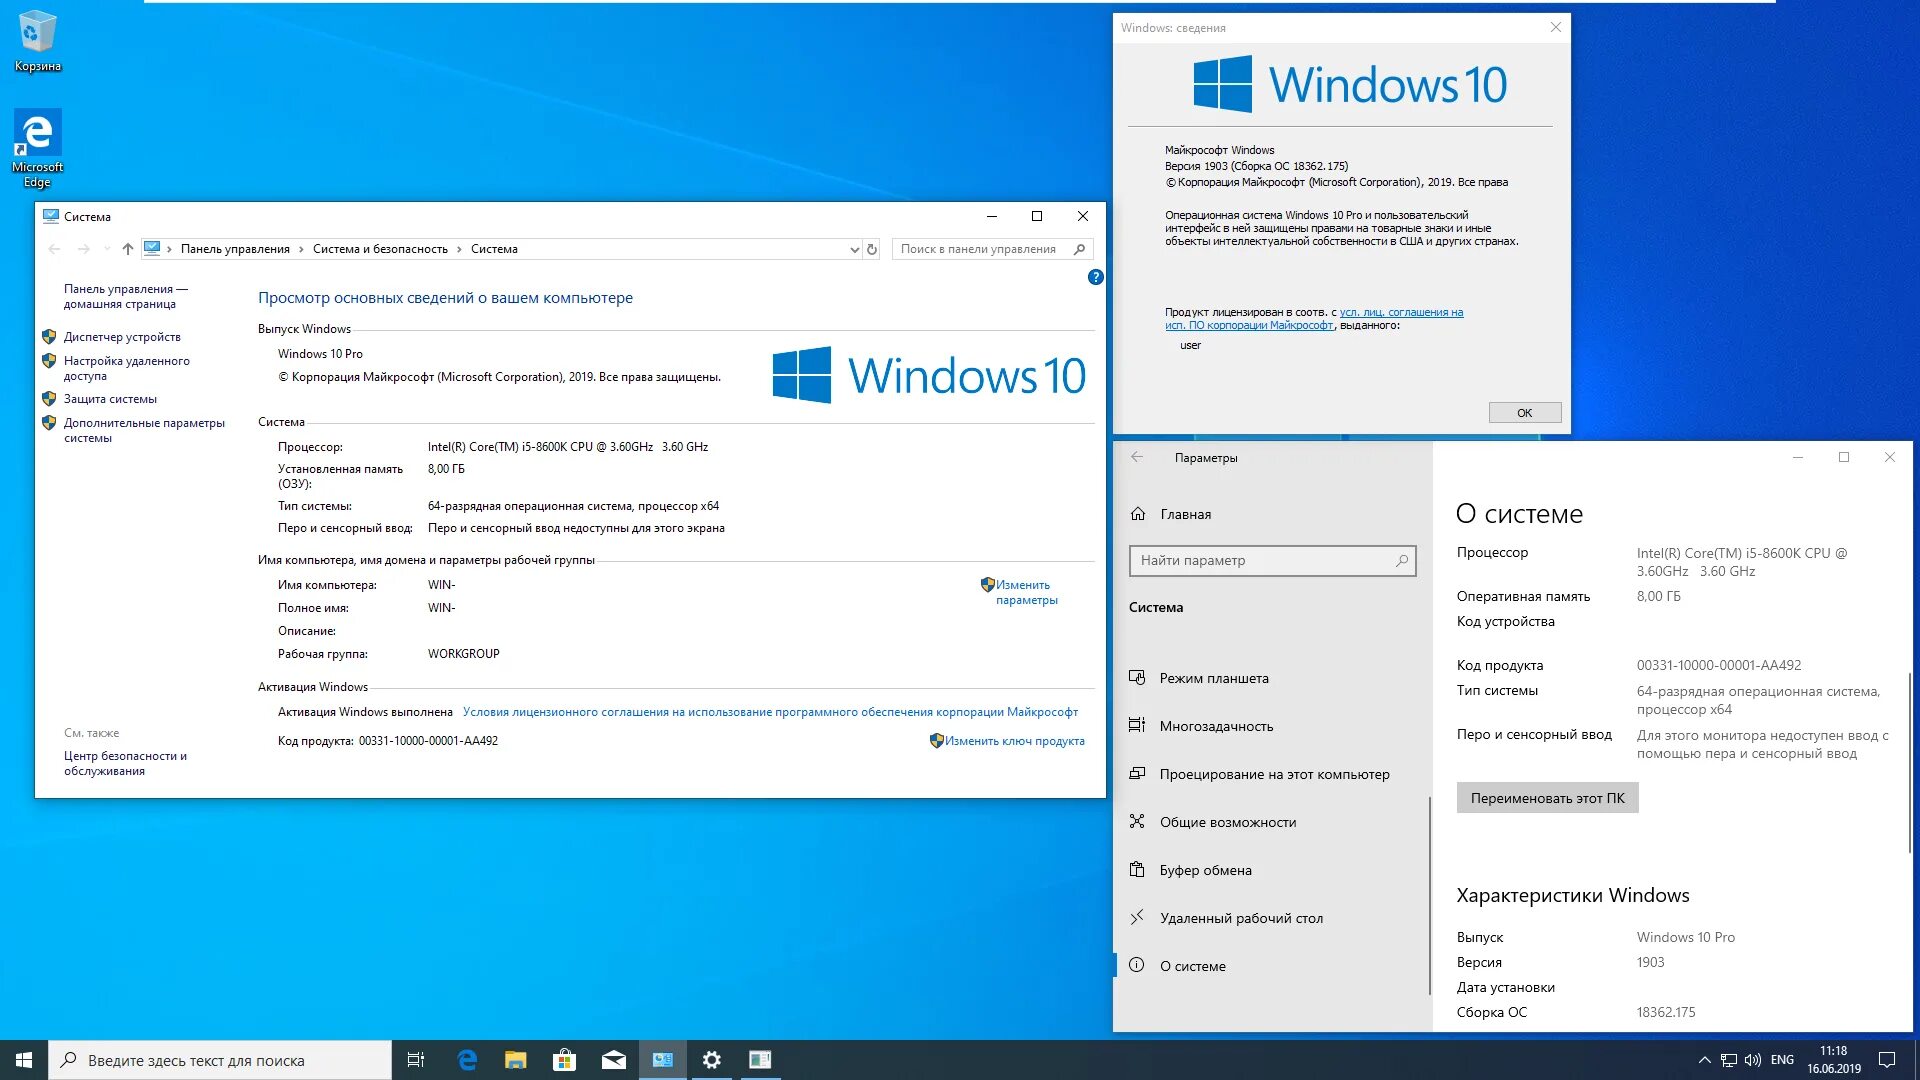 Windows 10 1903. Выпуск виндовс 10. Windows 10 Pro. Windows 10 1903 2020. 10 версия 1903